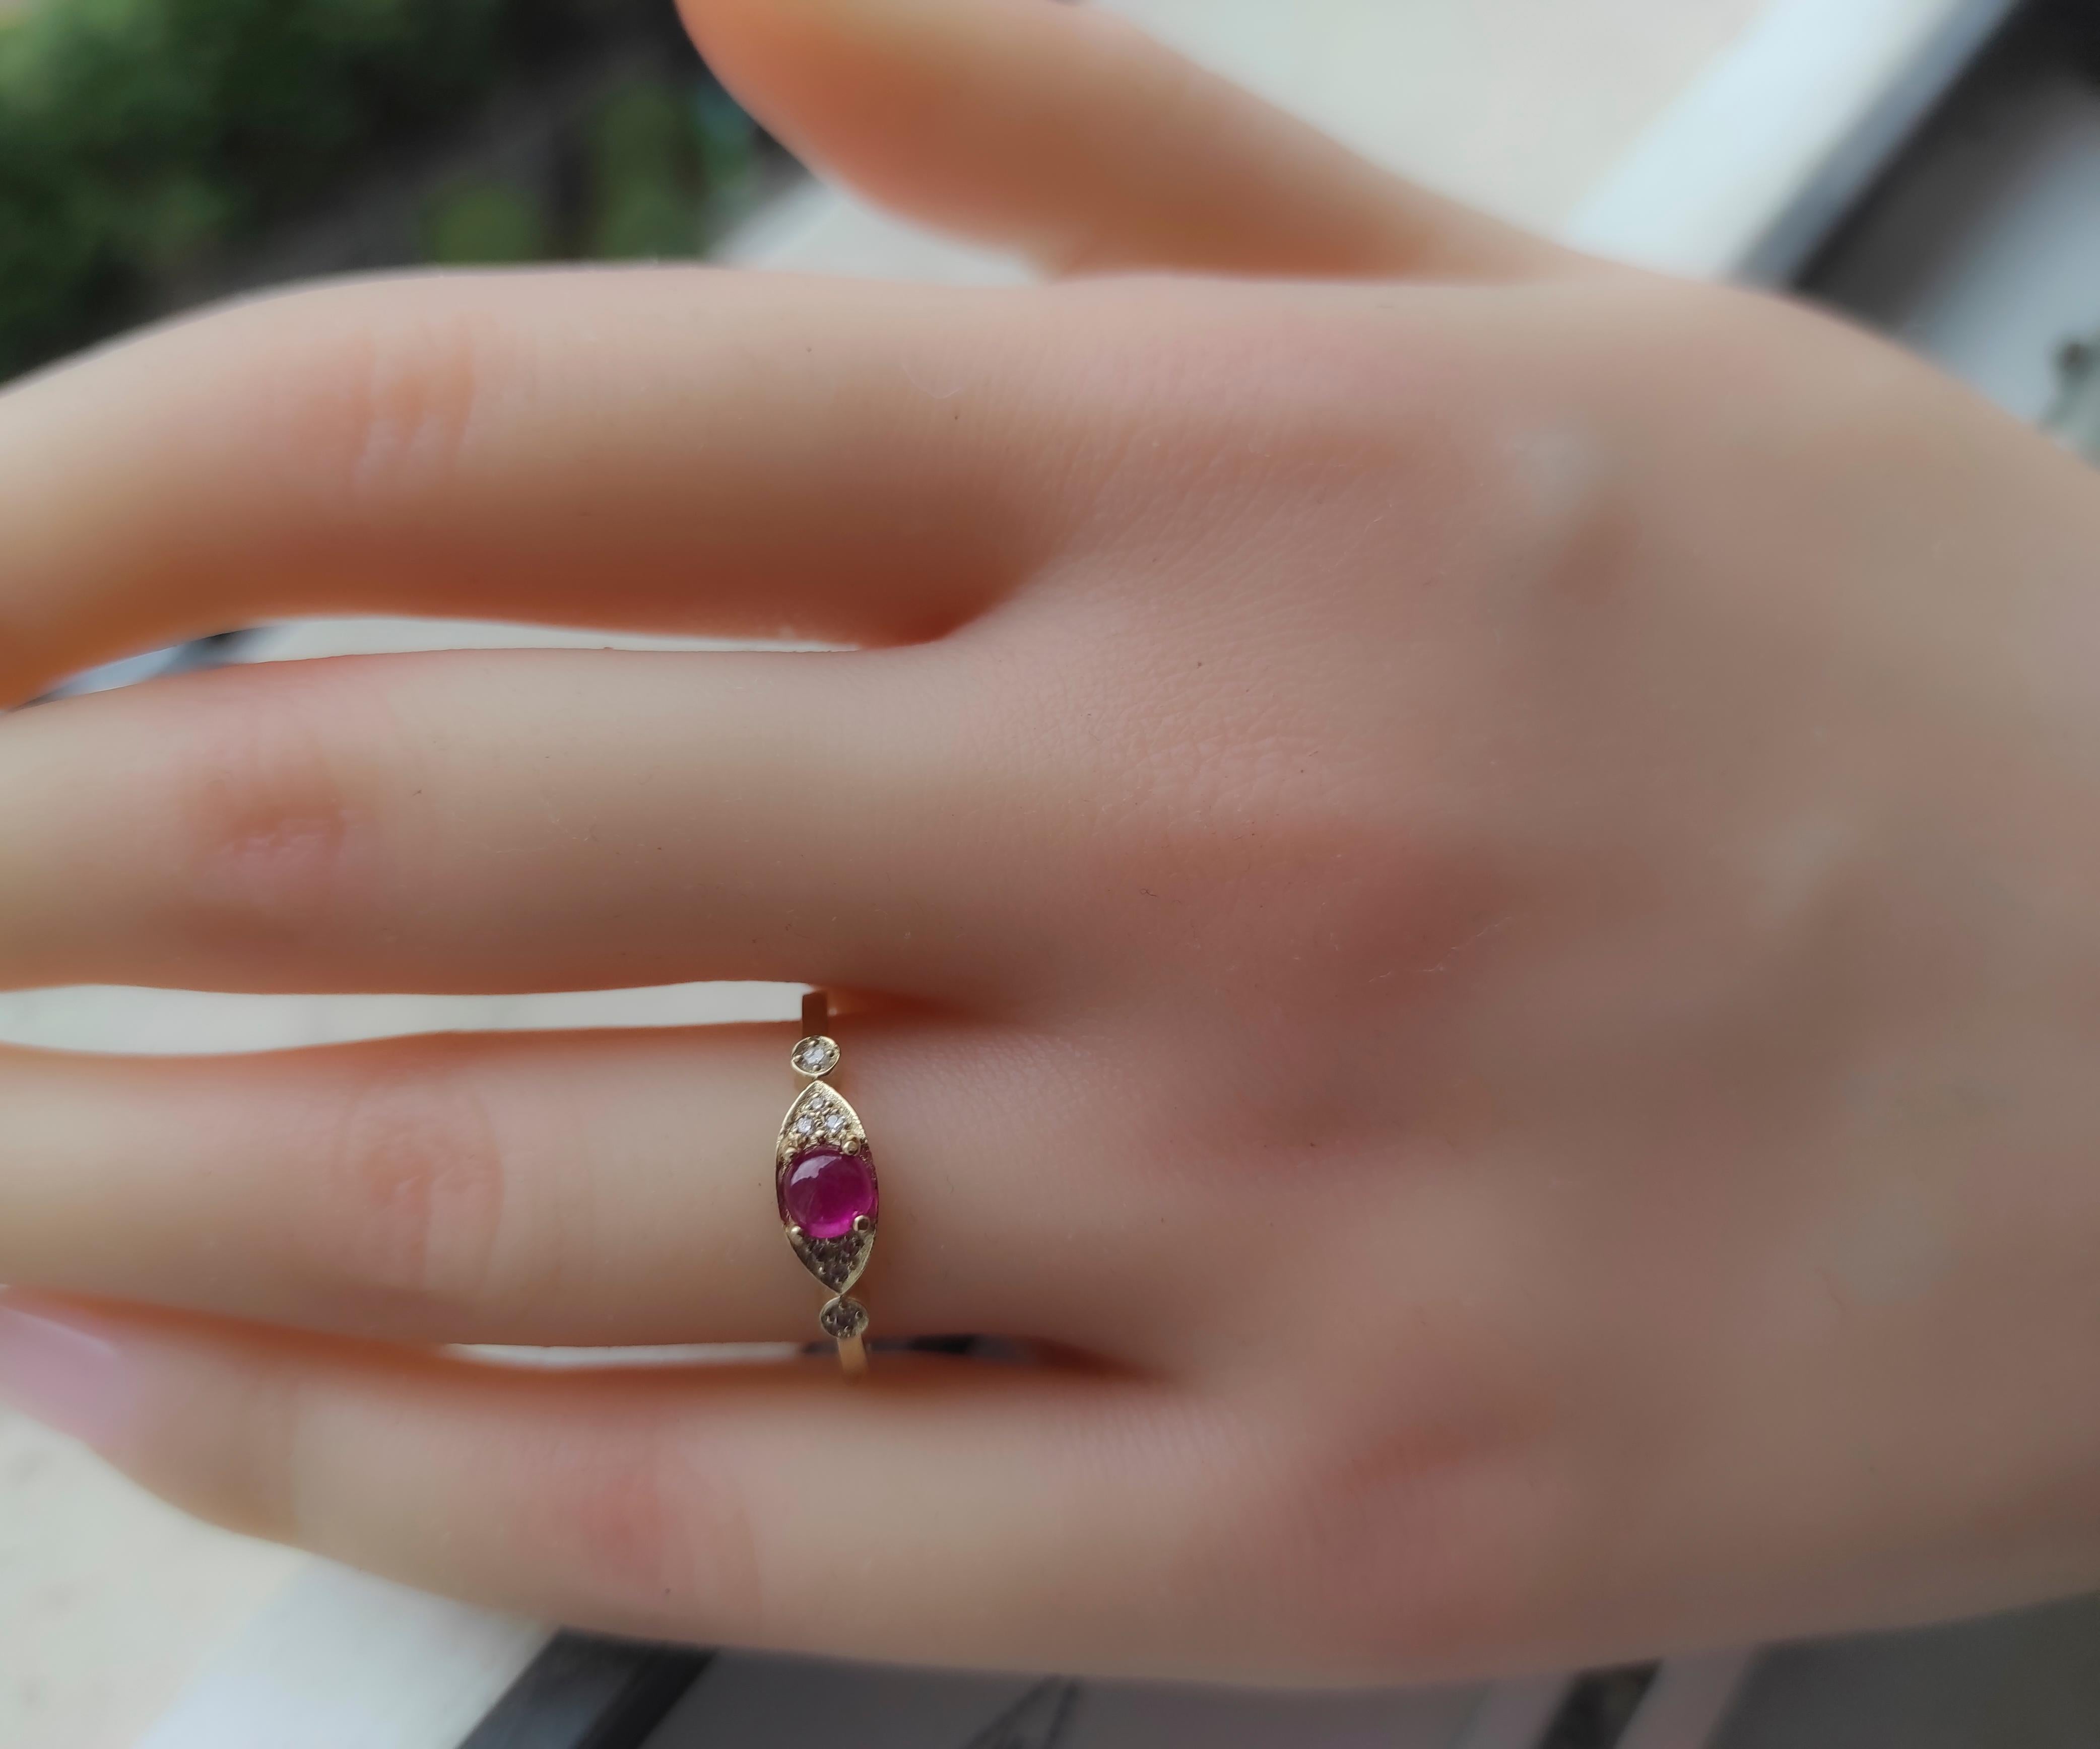 For Sale:  Ruby 14 karat ring.  Evil Eye Ring. July birthstone ruby ring 2